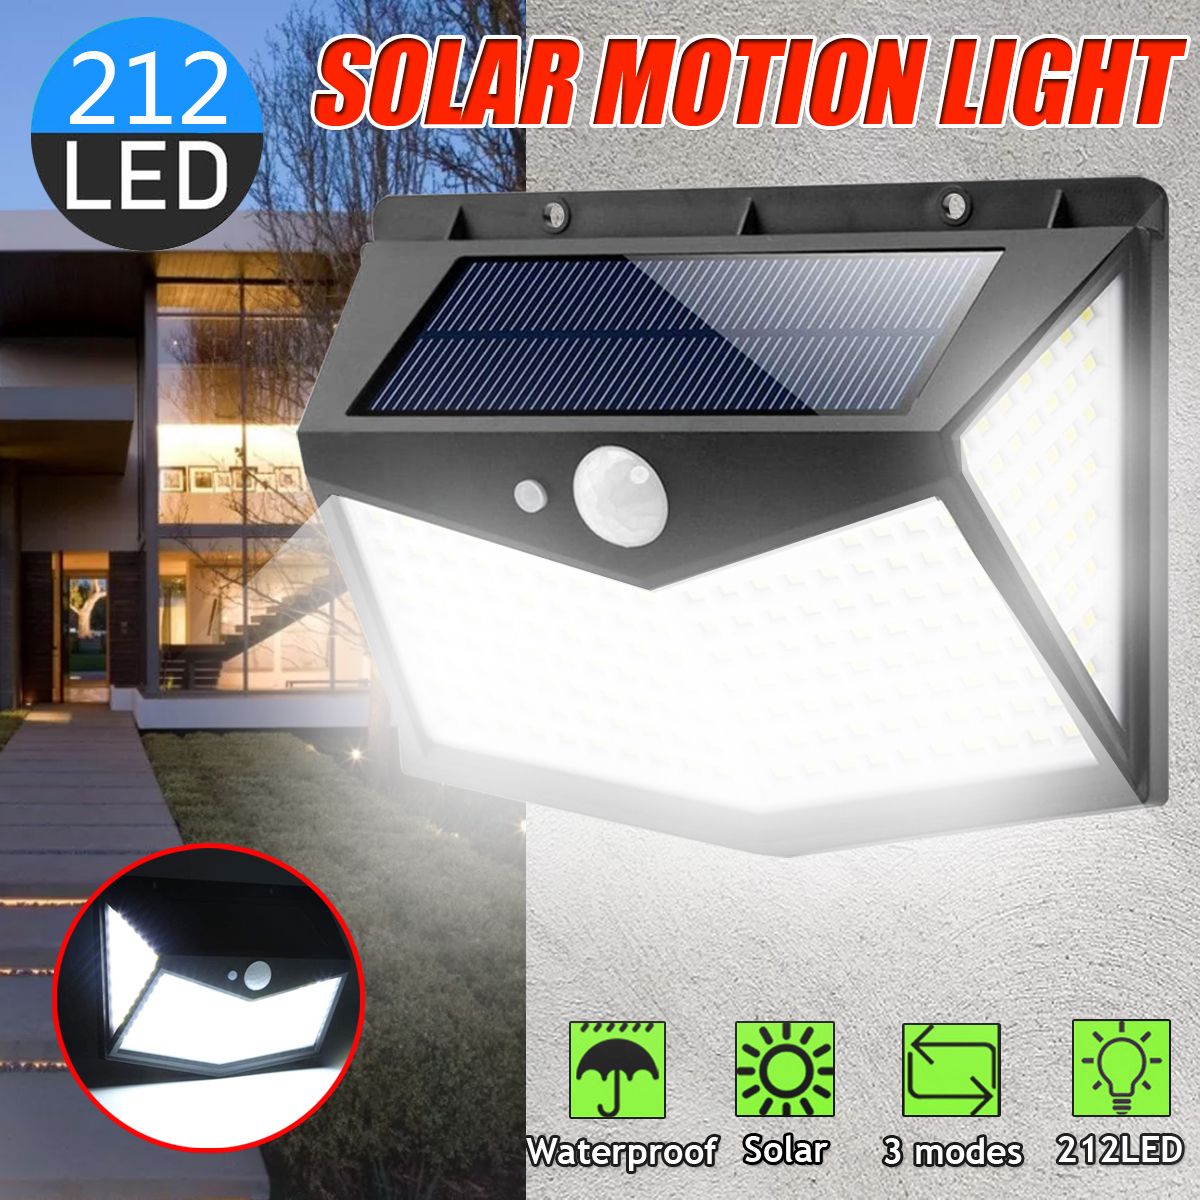 212-Led-Outdoor-Solar-Wall-Light-Motion-Sensor-Waterproof-Safety-Light-1674982